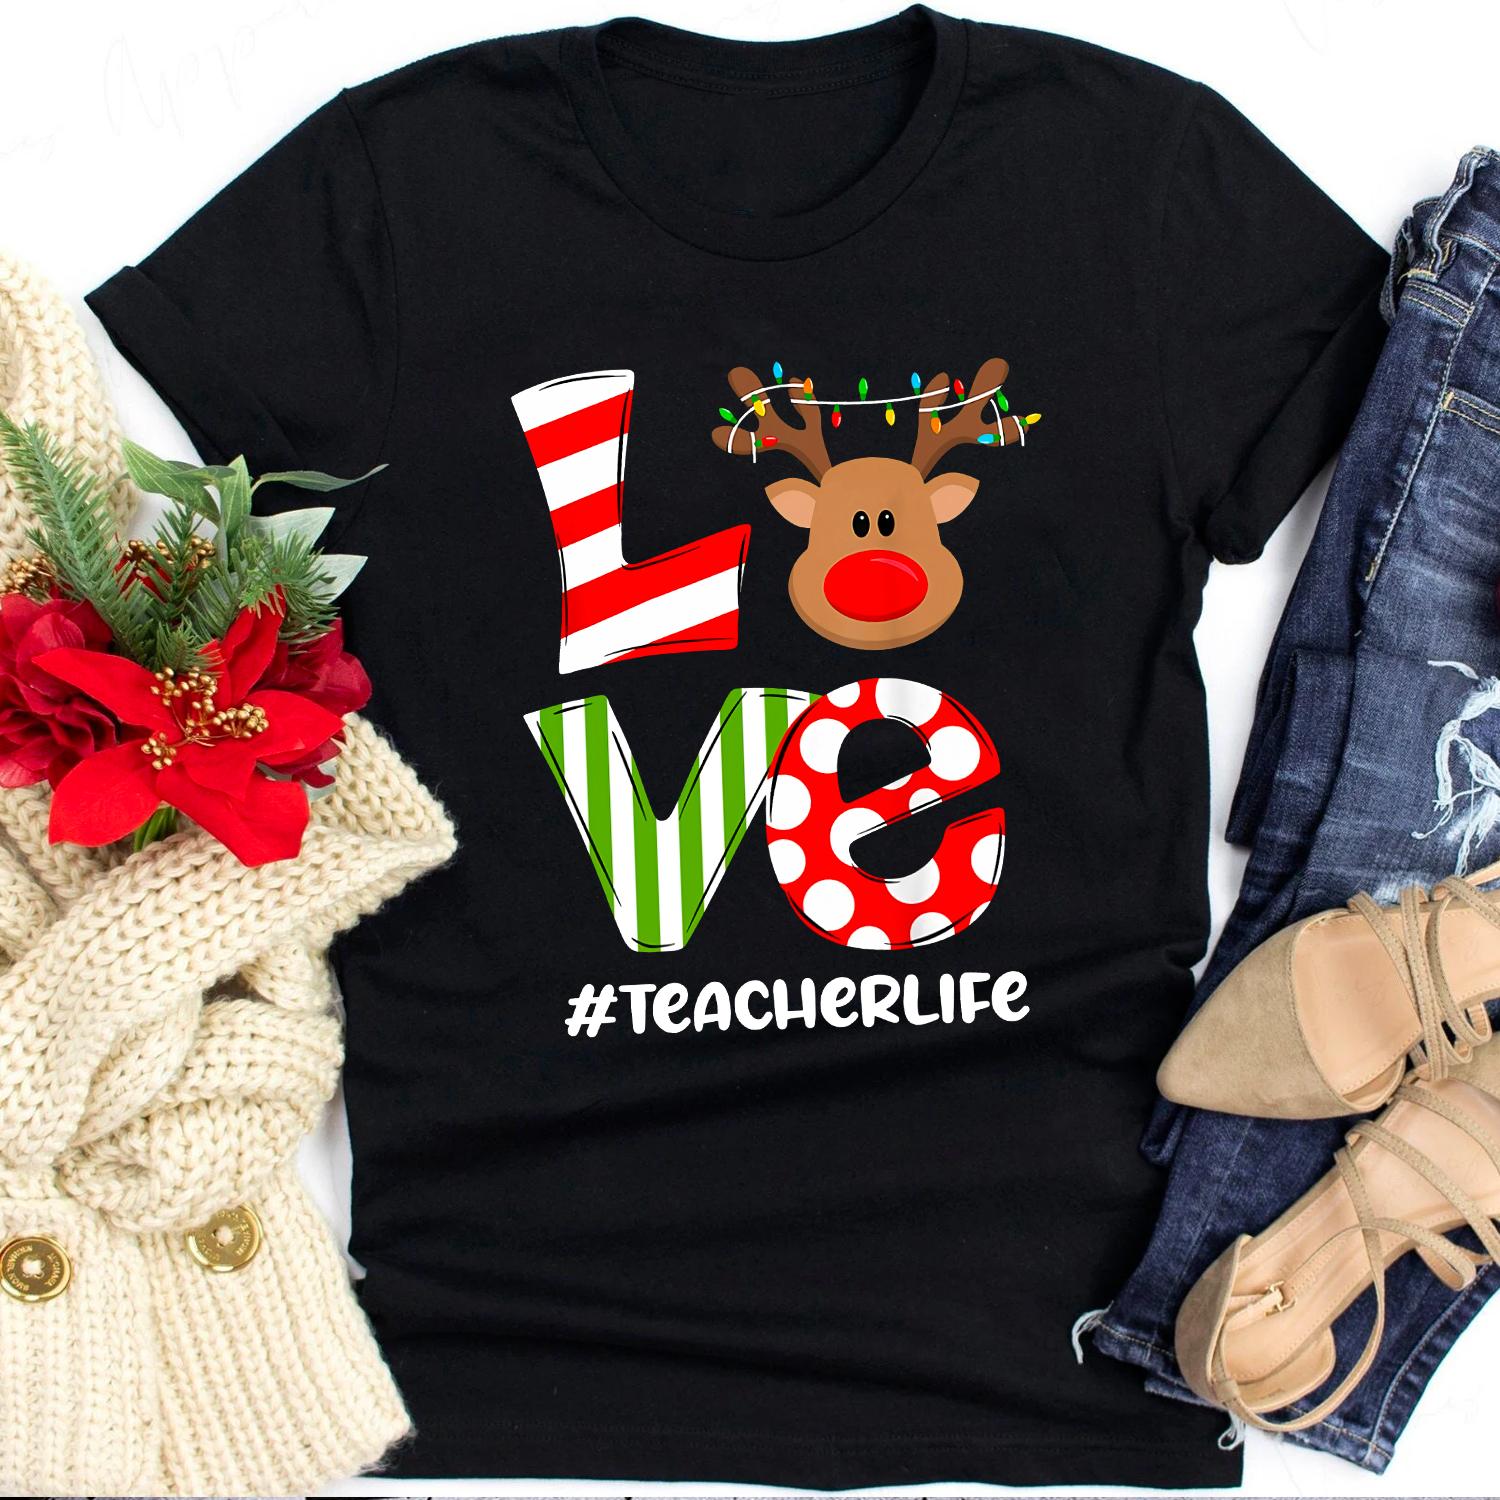 Teacher life - Spread and teach love, teacher the job, reindeer graphic T-shirt